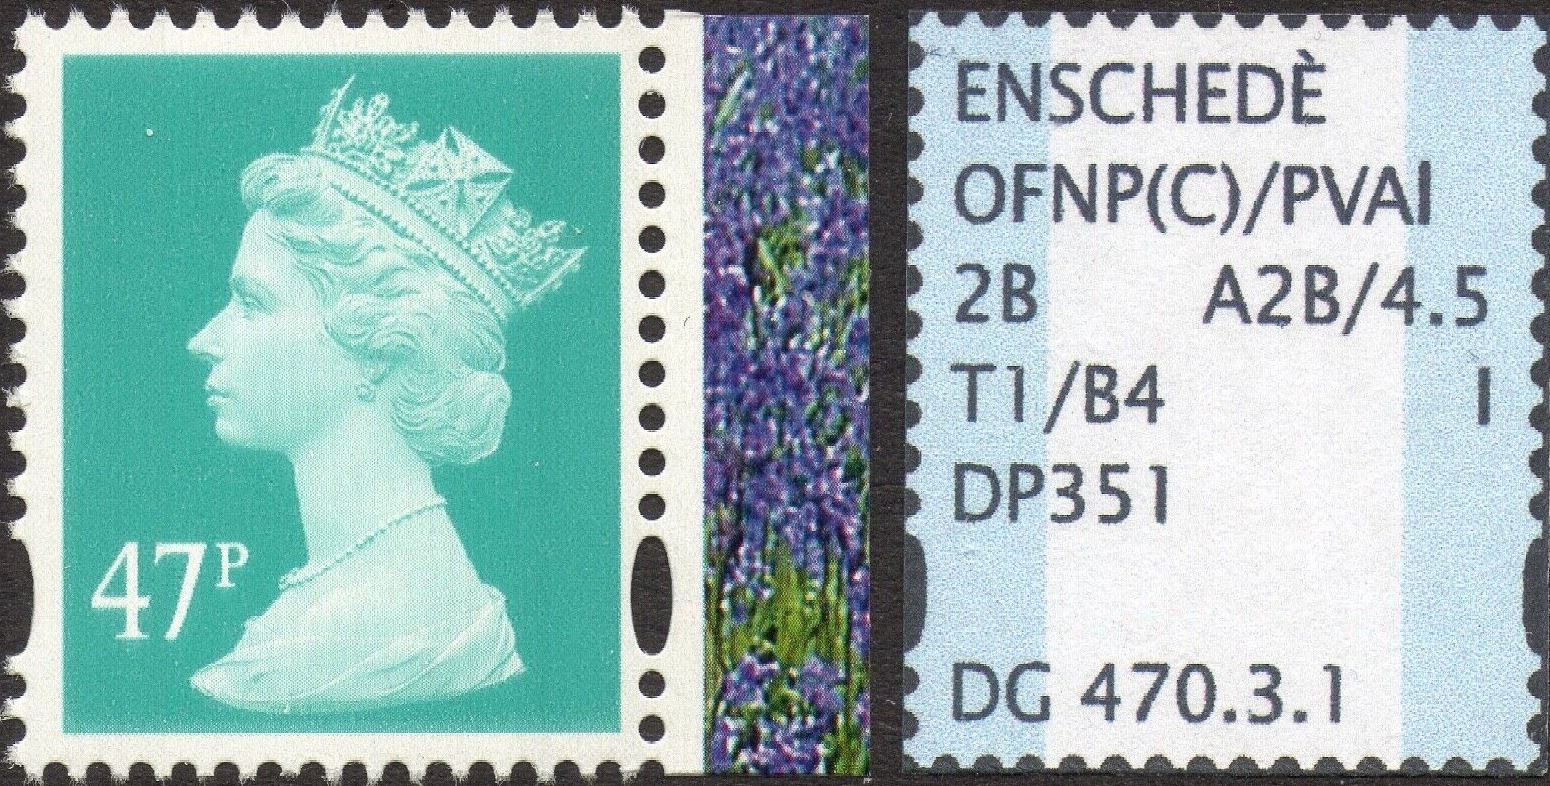 2004 GB - SGY1723 (U418) 47p Turquoise Green (E) frm DX33 PB MNH